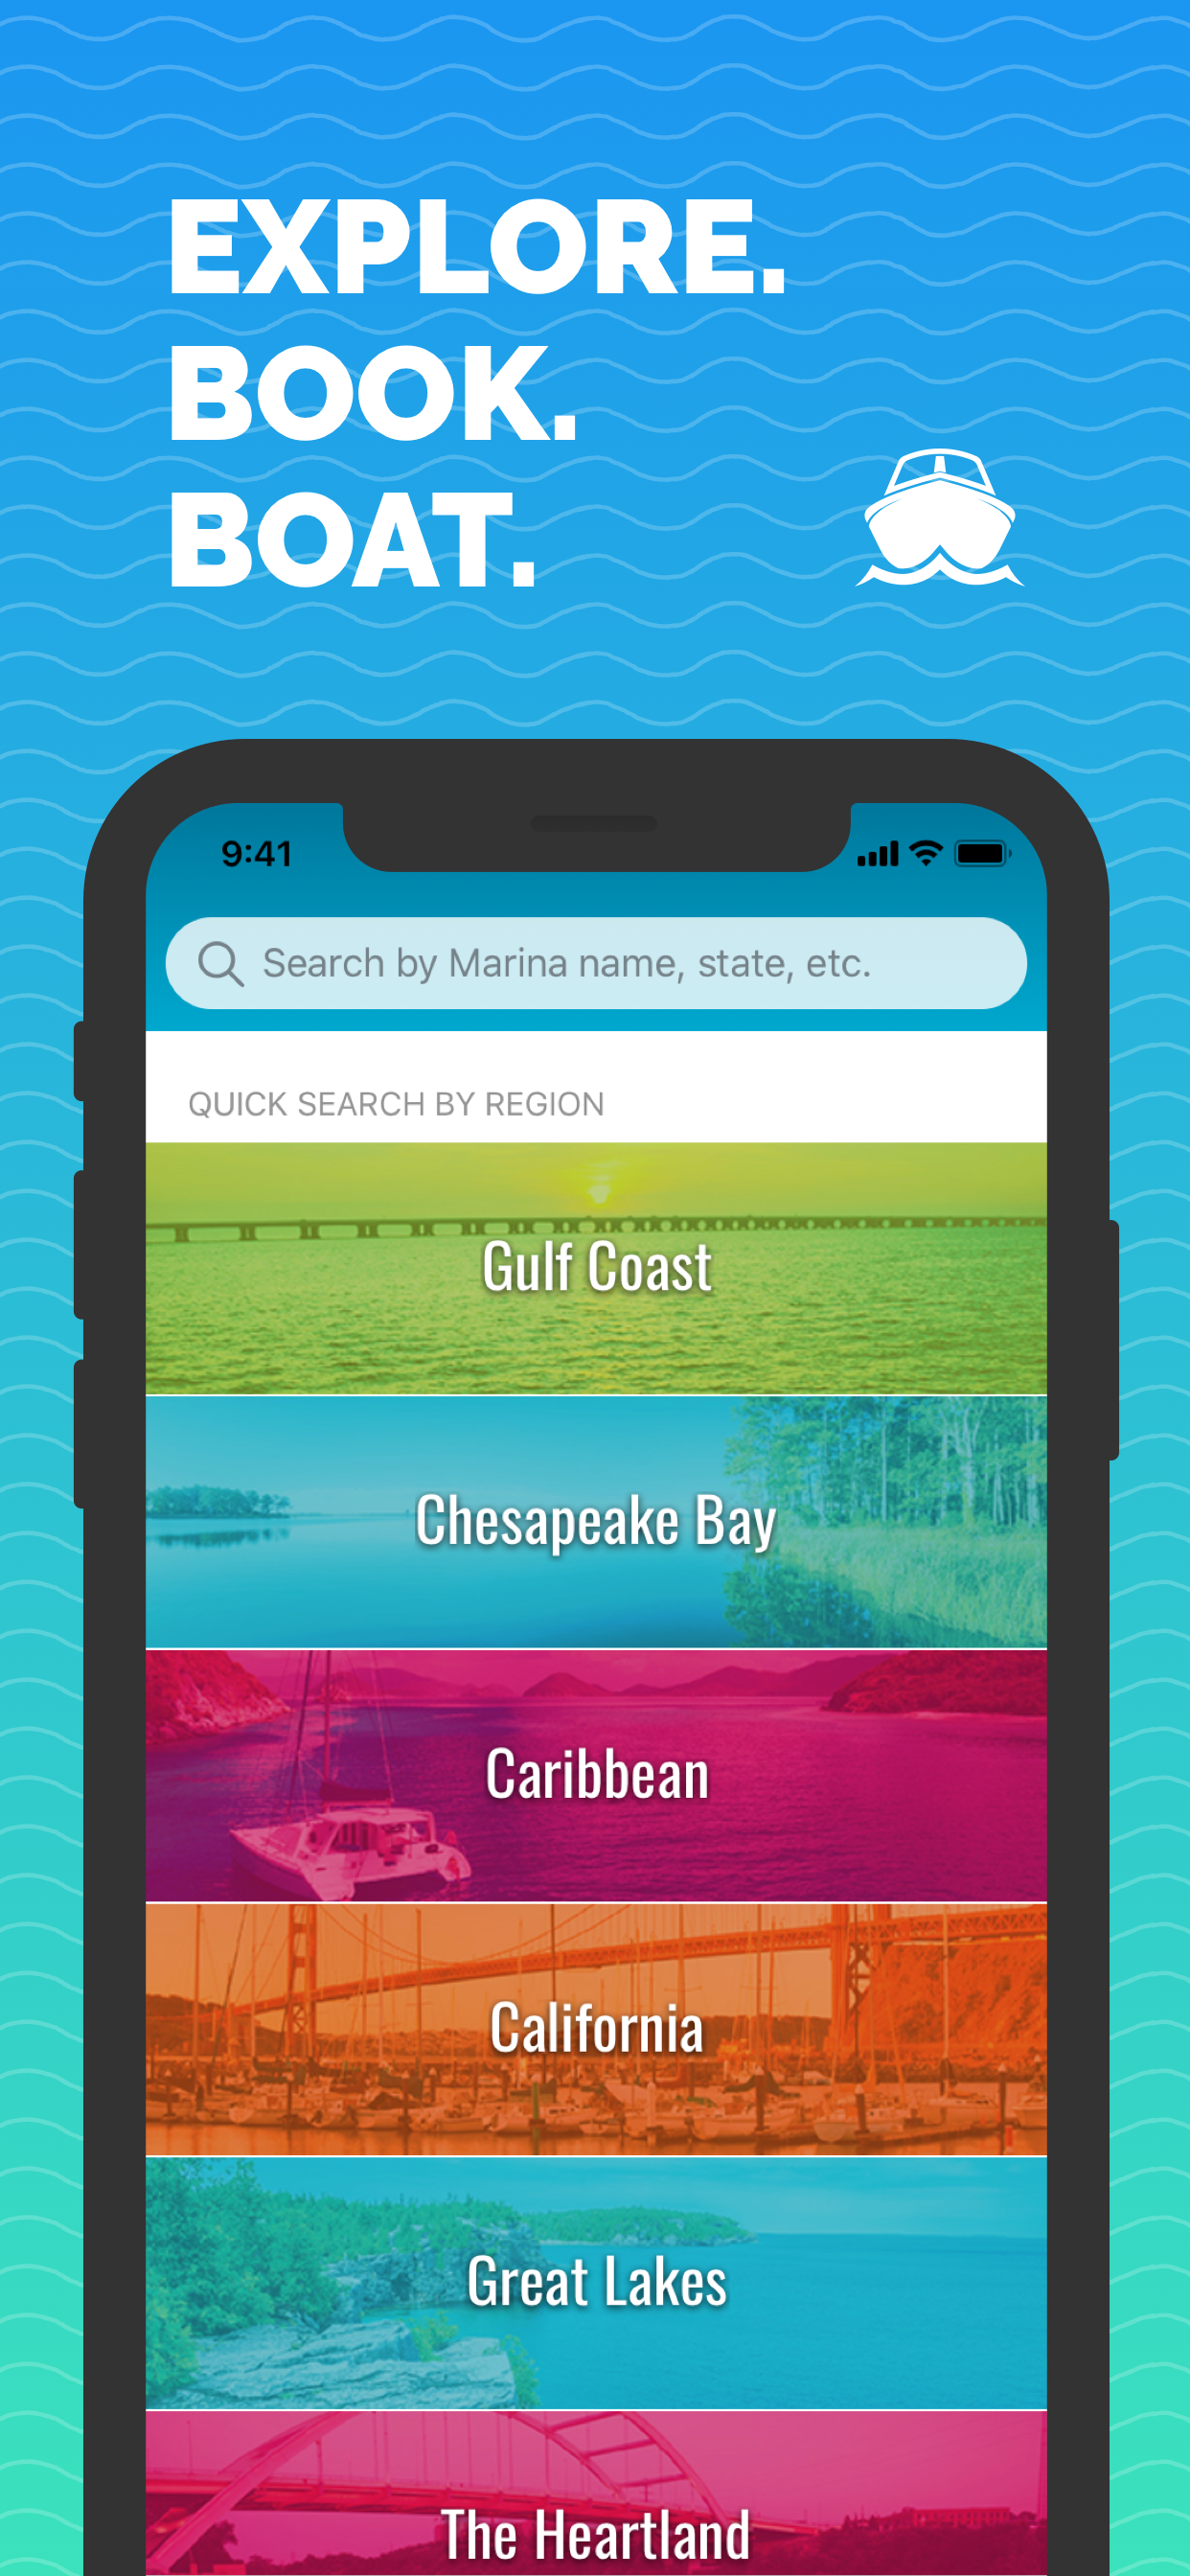 Snag-A-Slip - Mobile App - Updates - Book Boat Slips